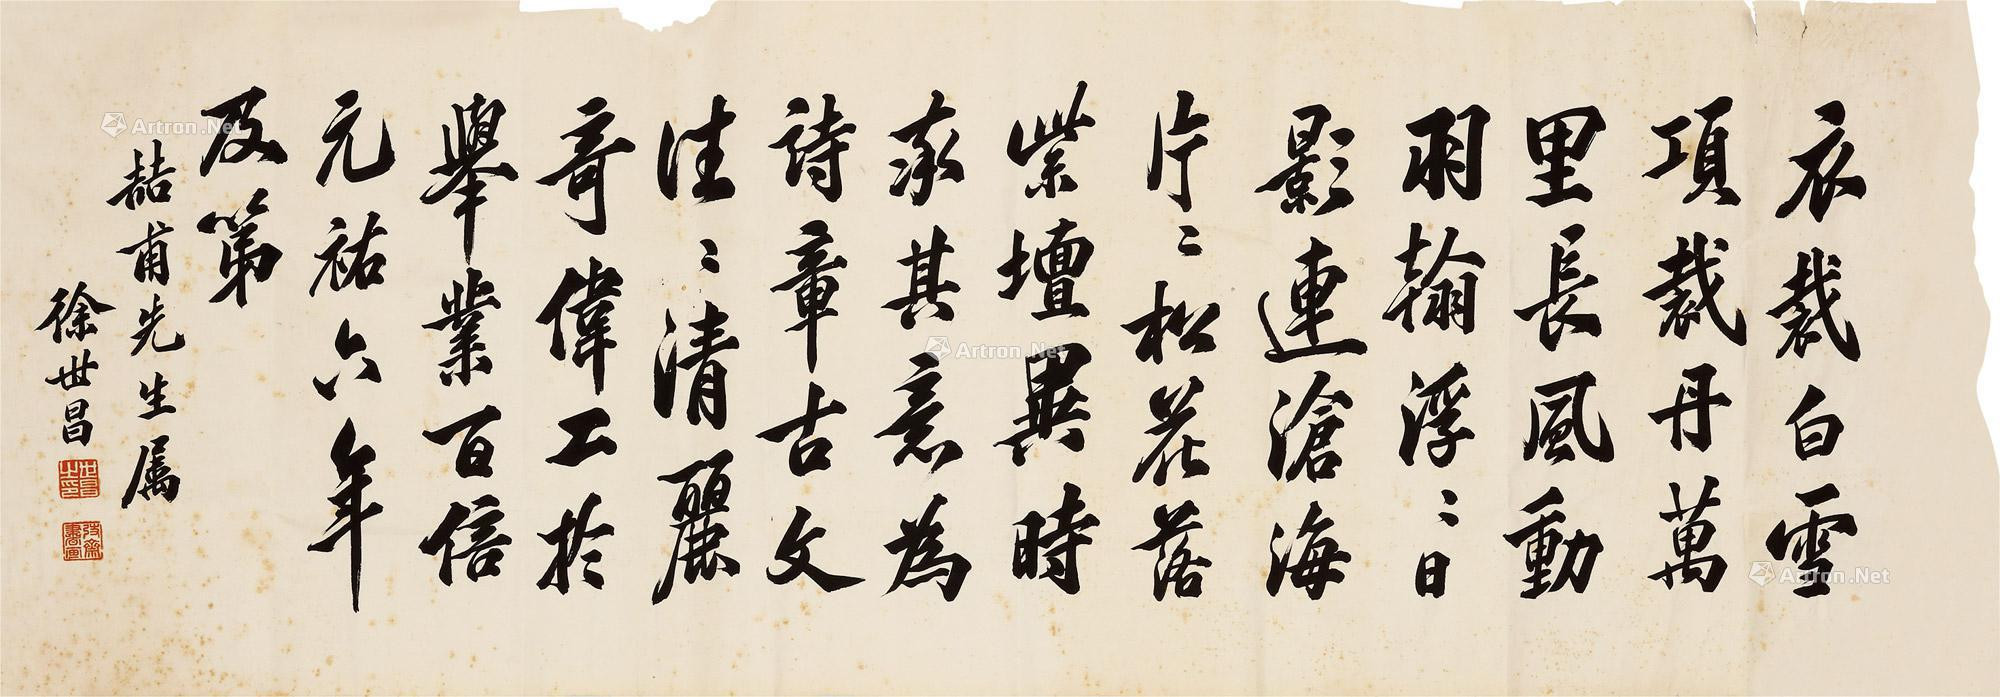 Calligraphy by Xu Shichang